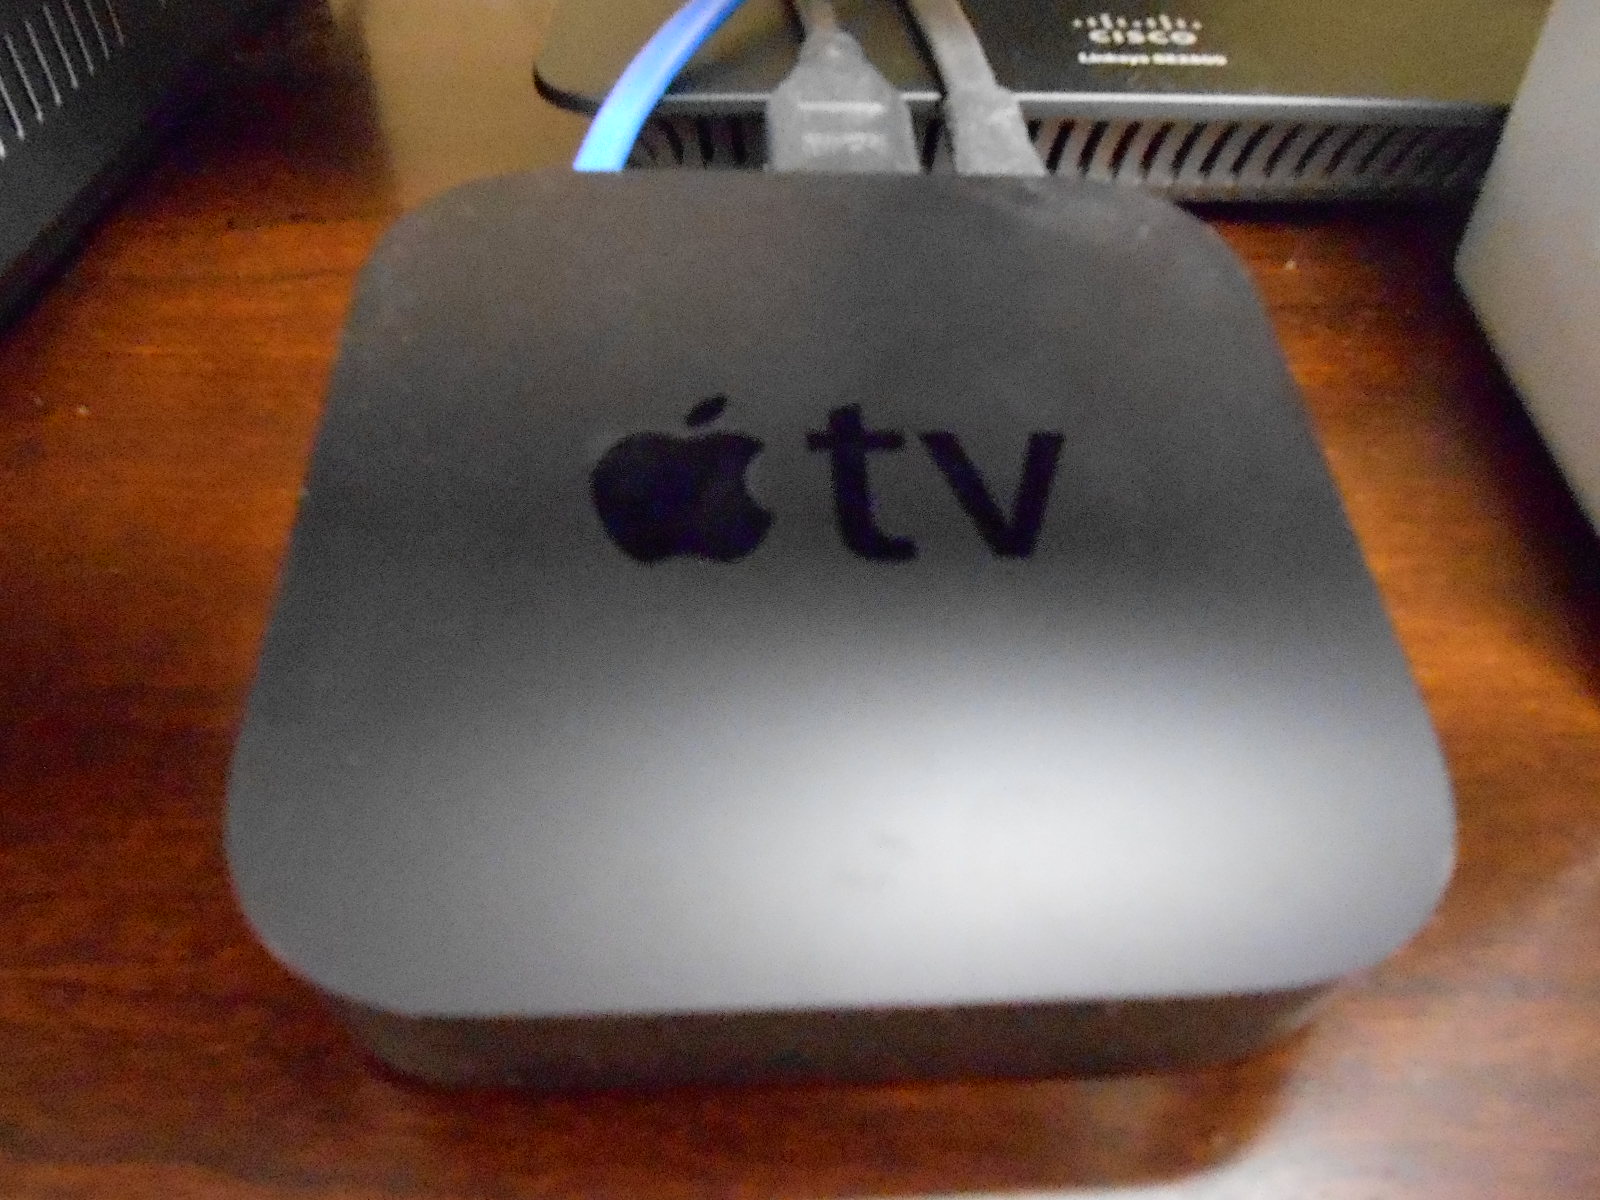 Apple TV Device